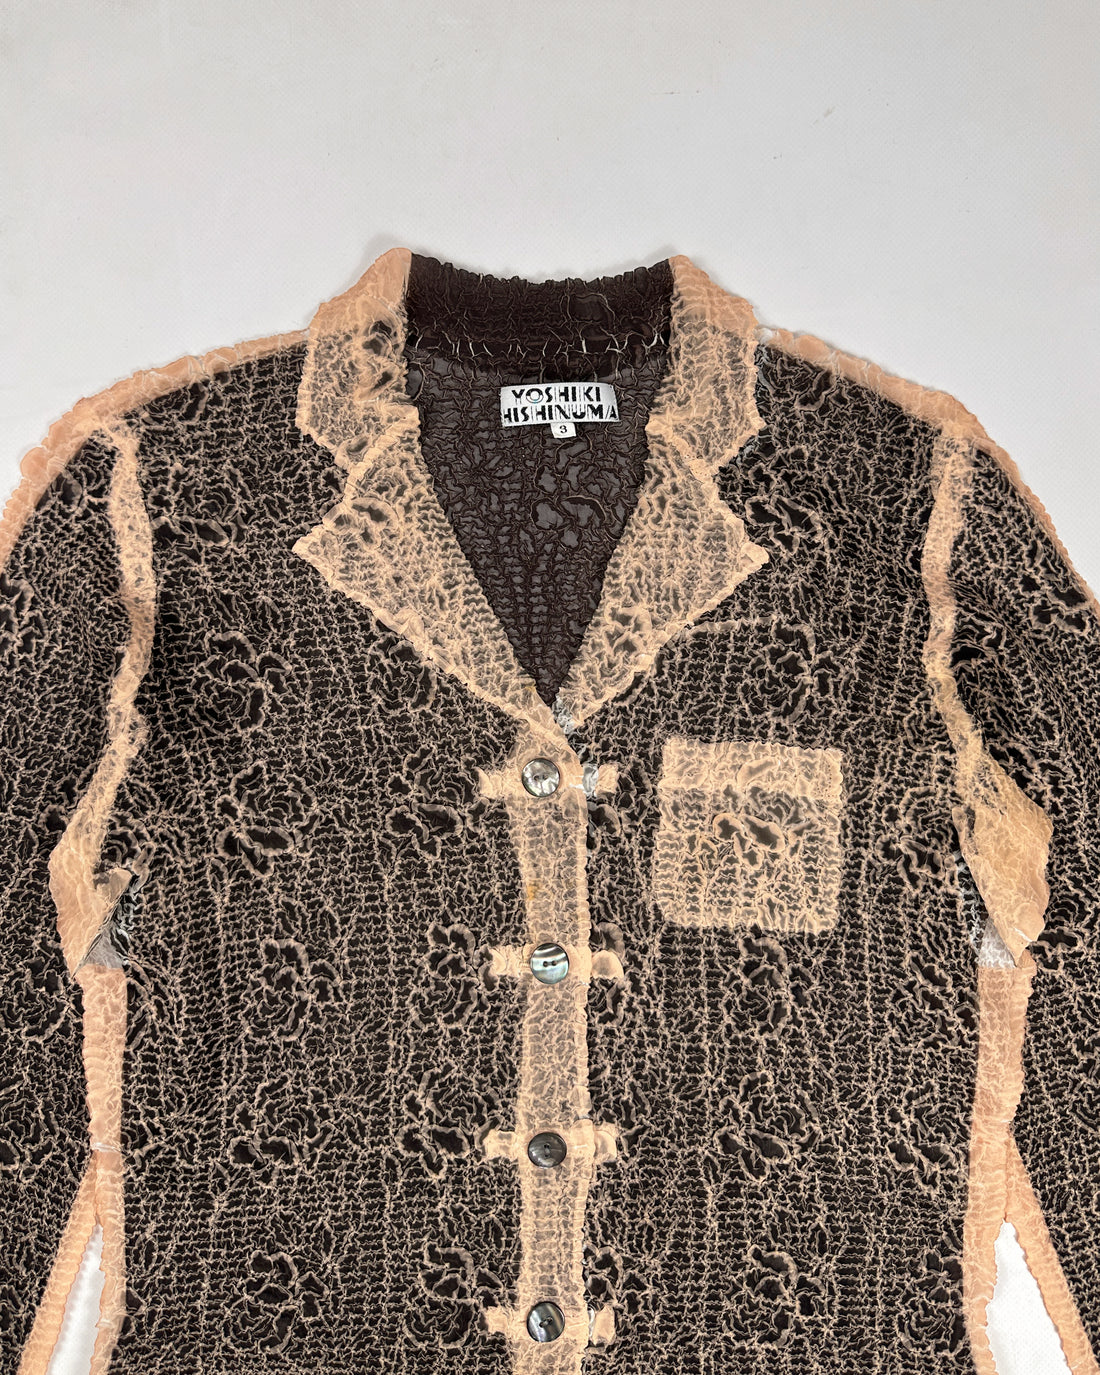 Yoshiki Hishinuma Textured Long Sleeve Shirt 1990's